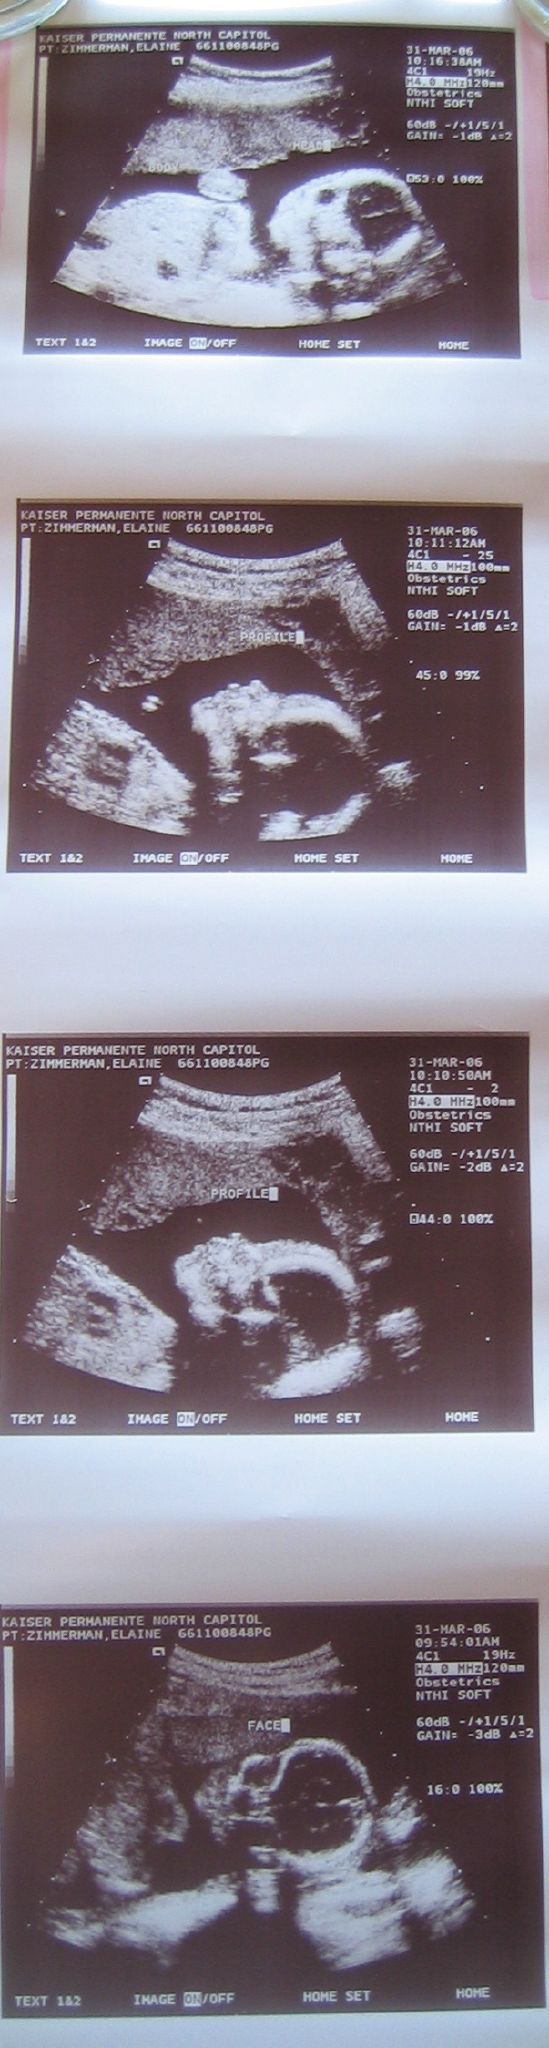 22+weeks+pregnant+images